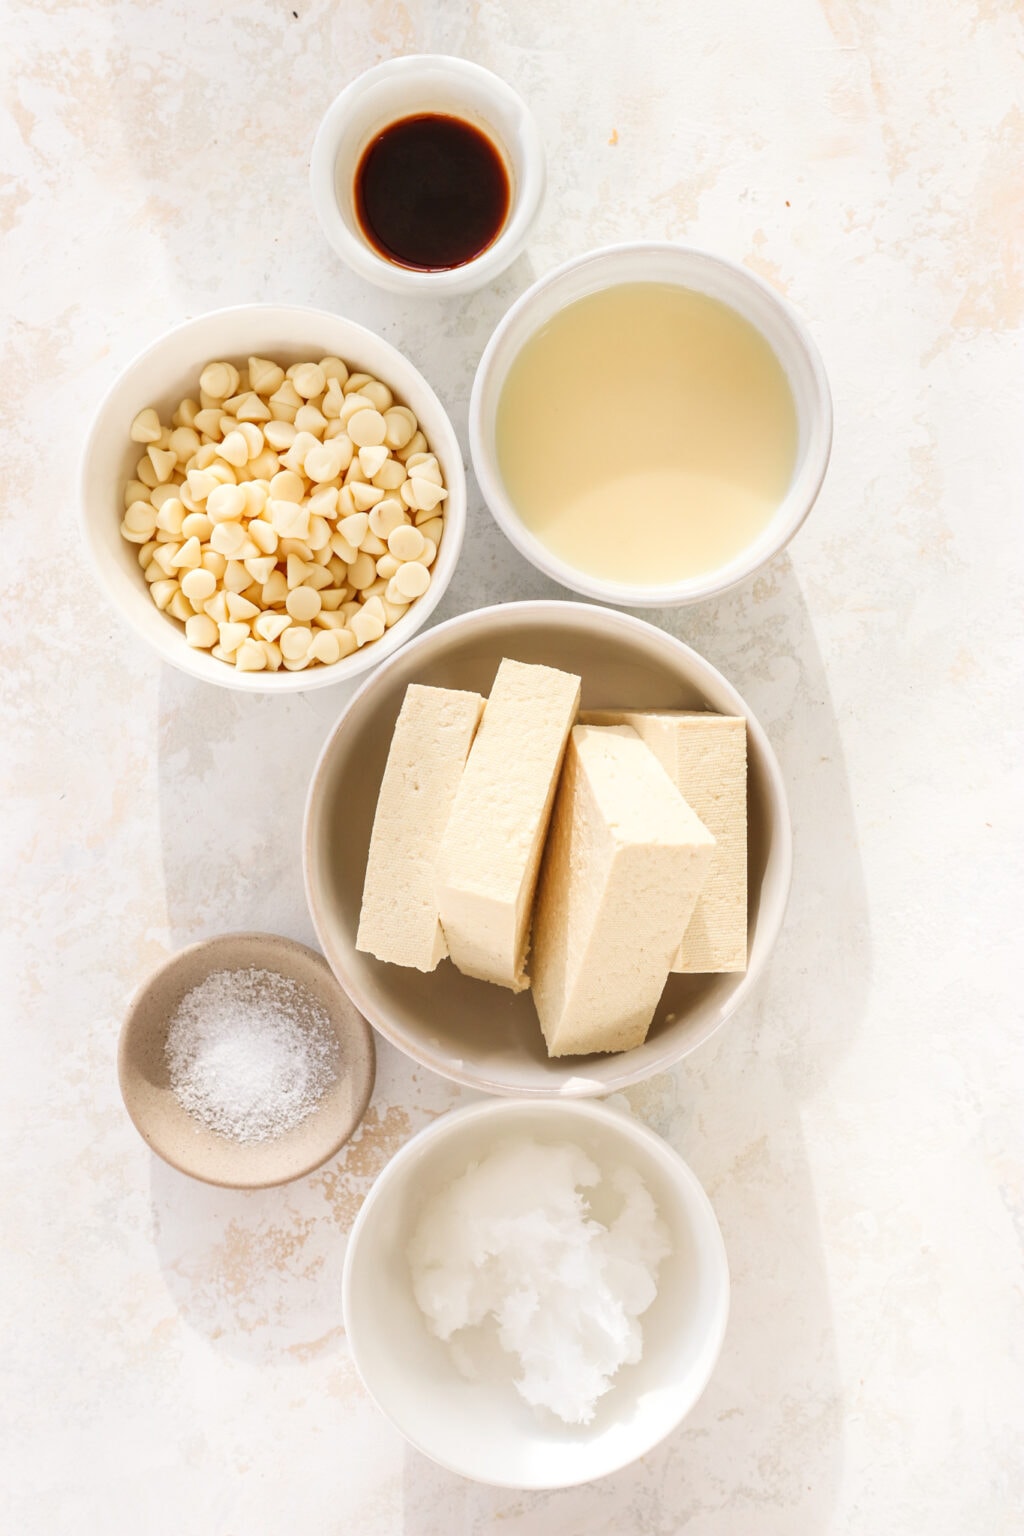 Ingredients for a 5 ingredient tofu eggnog mini creamy cheesecake, including tofu, white chocolate, eggnog, vanilla, coconut oil, and salt